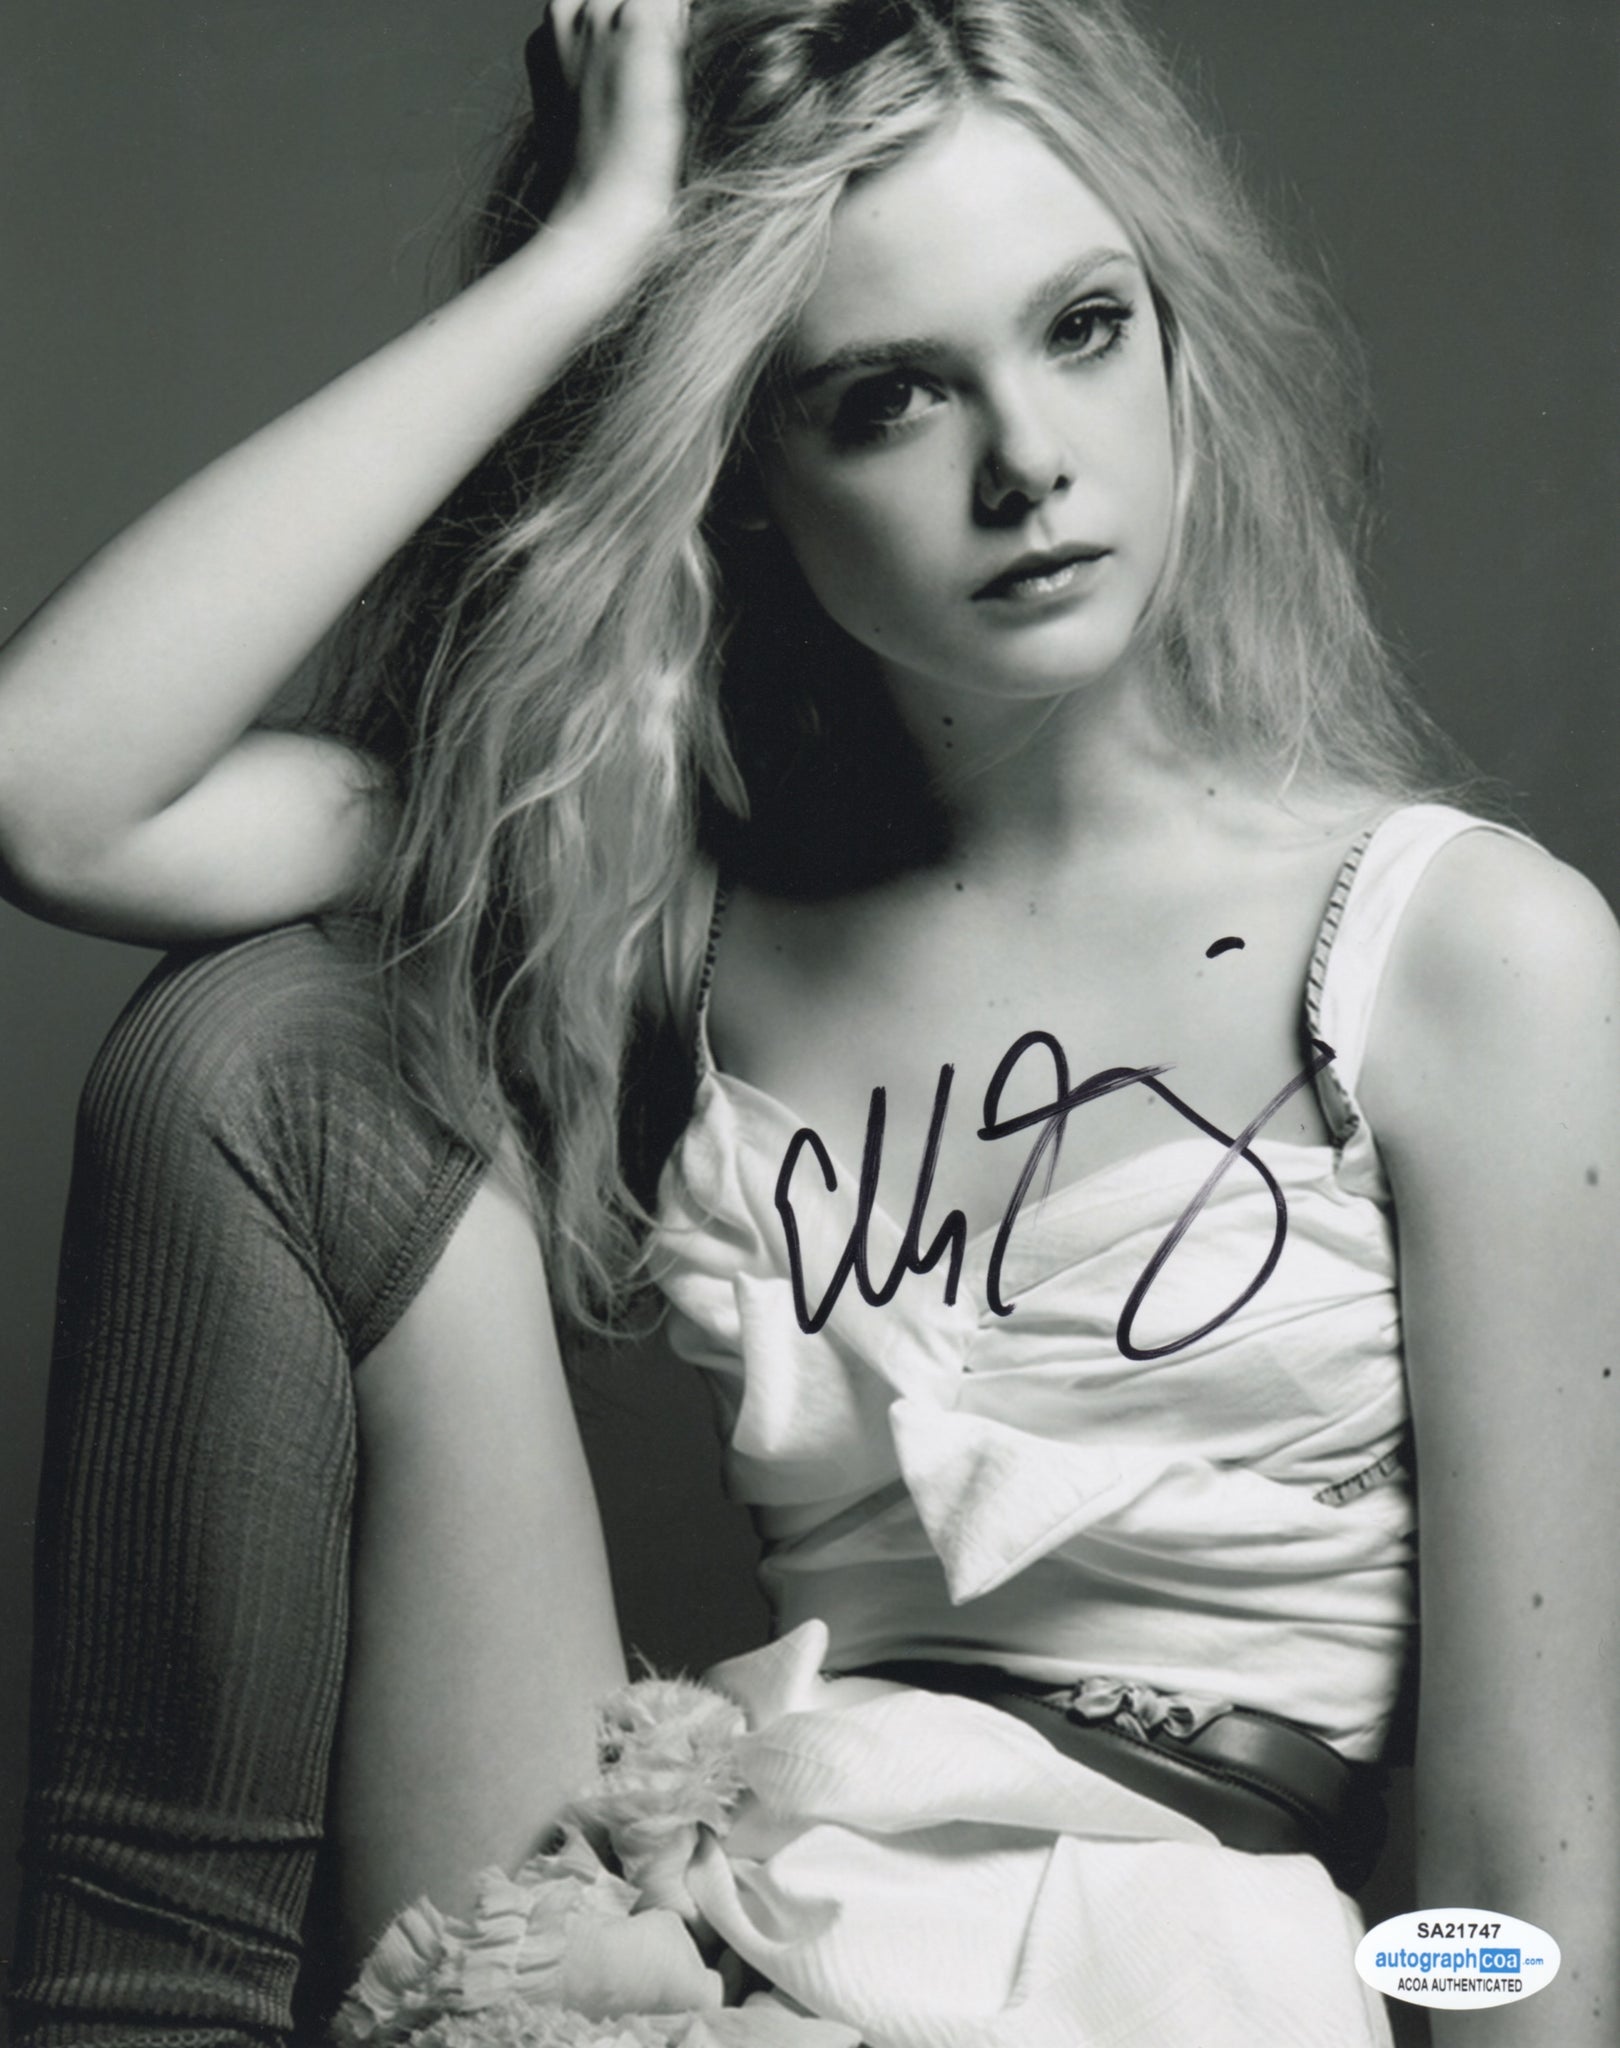 Elle Fanning Sexy Signed Autograph 8x10 Photo ACOA #3 - Outlaw Hobbies Authentic Autographs